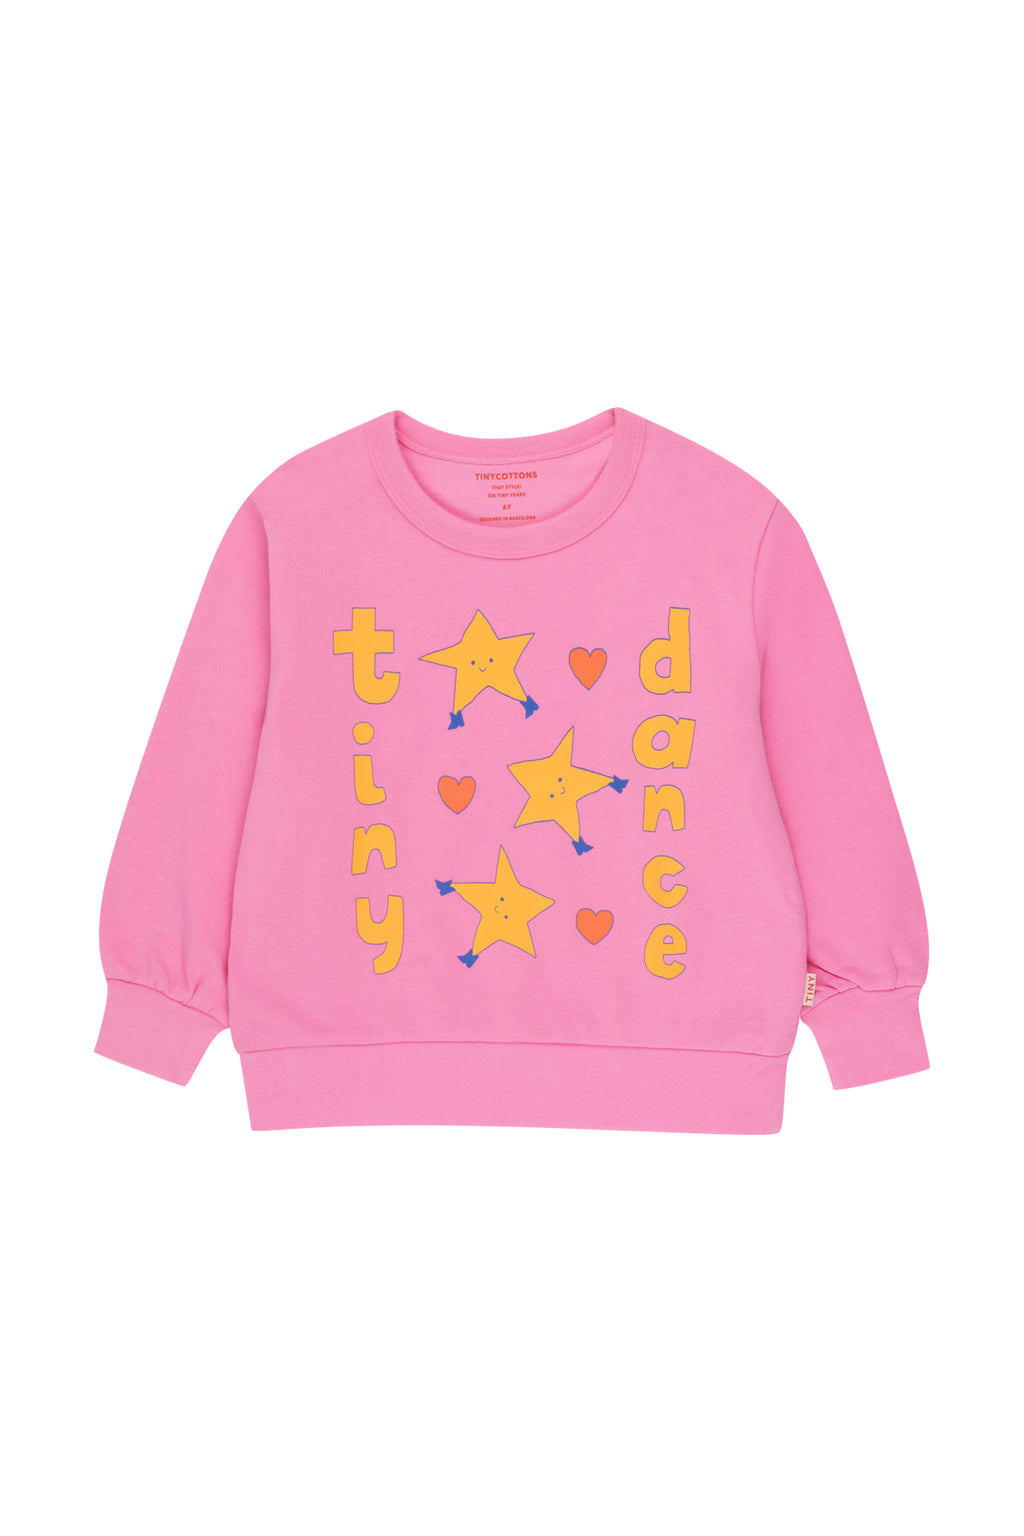 Tiny Cottons Dance Sweatshirt - Pink